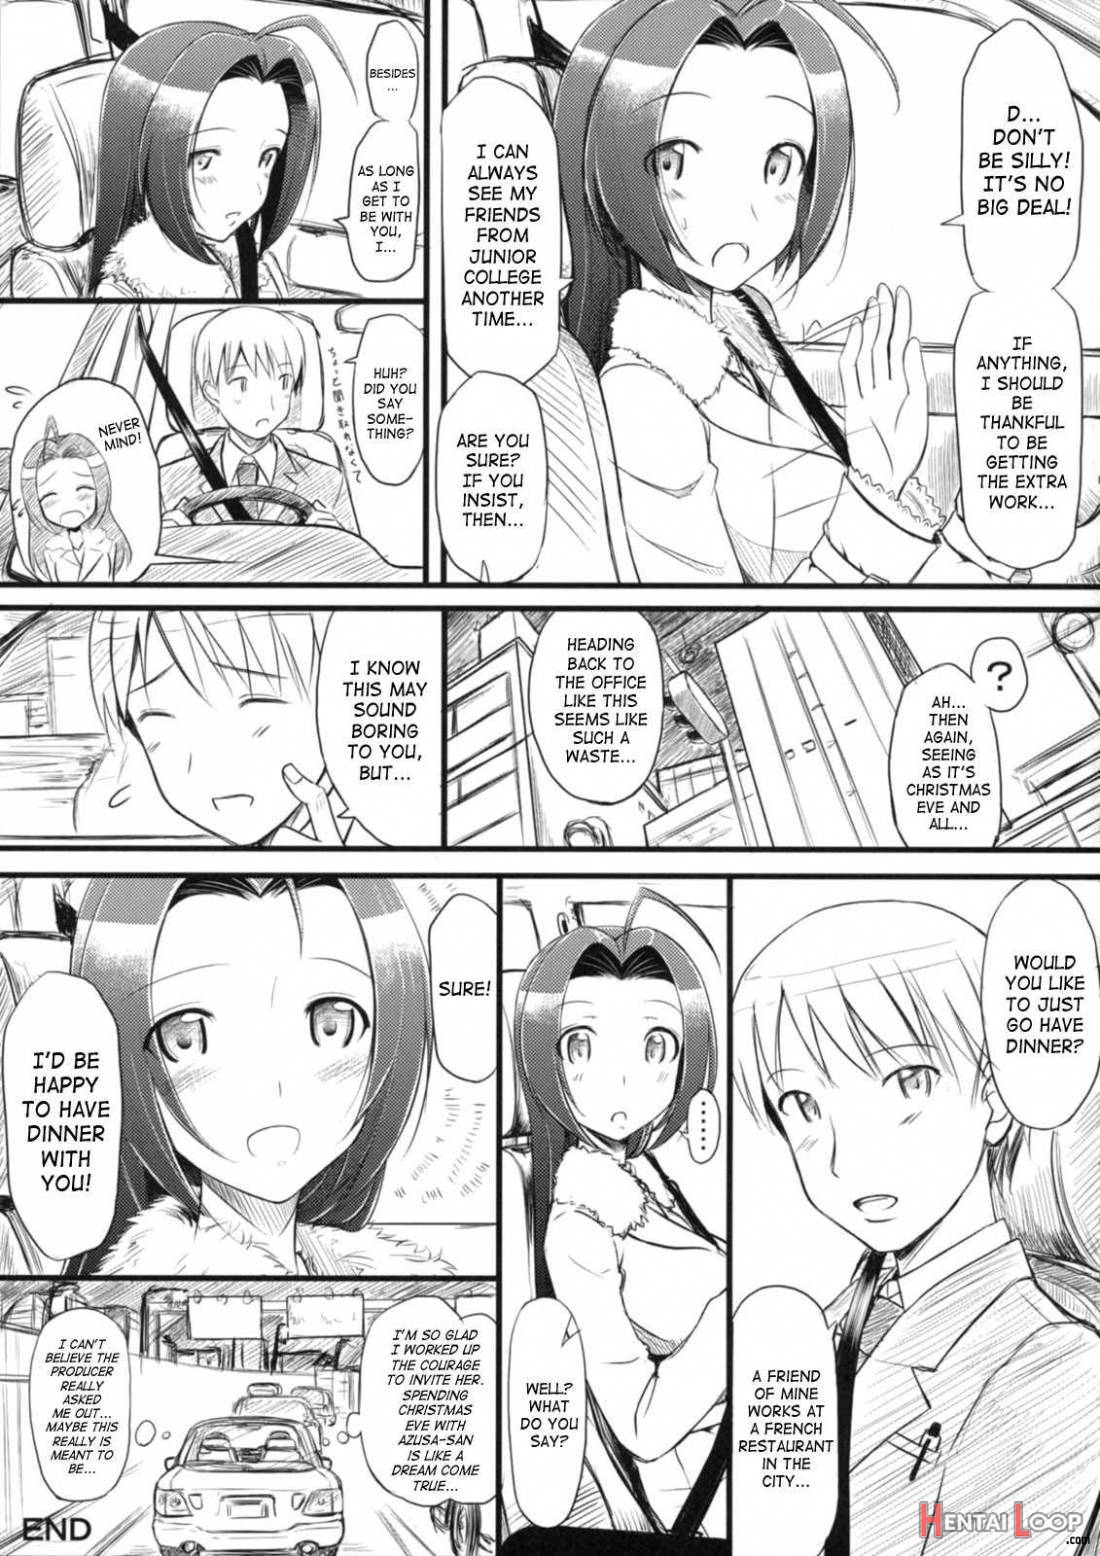 Azusa-san No Present For You! page 33